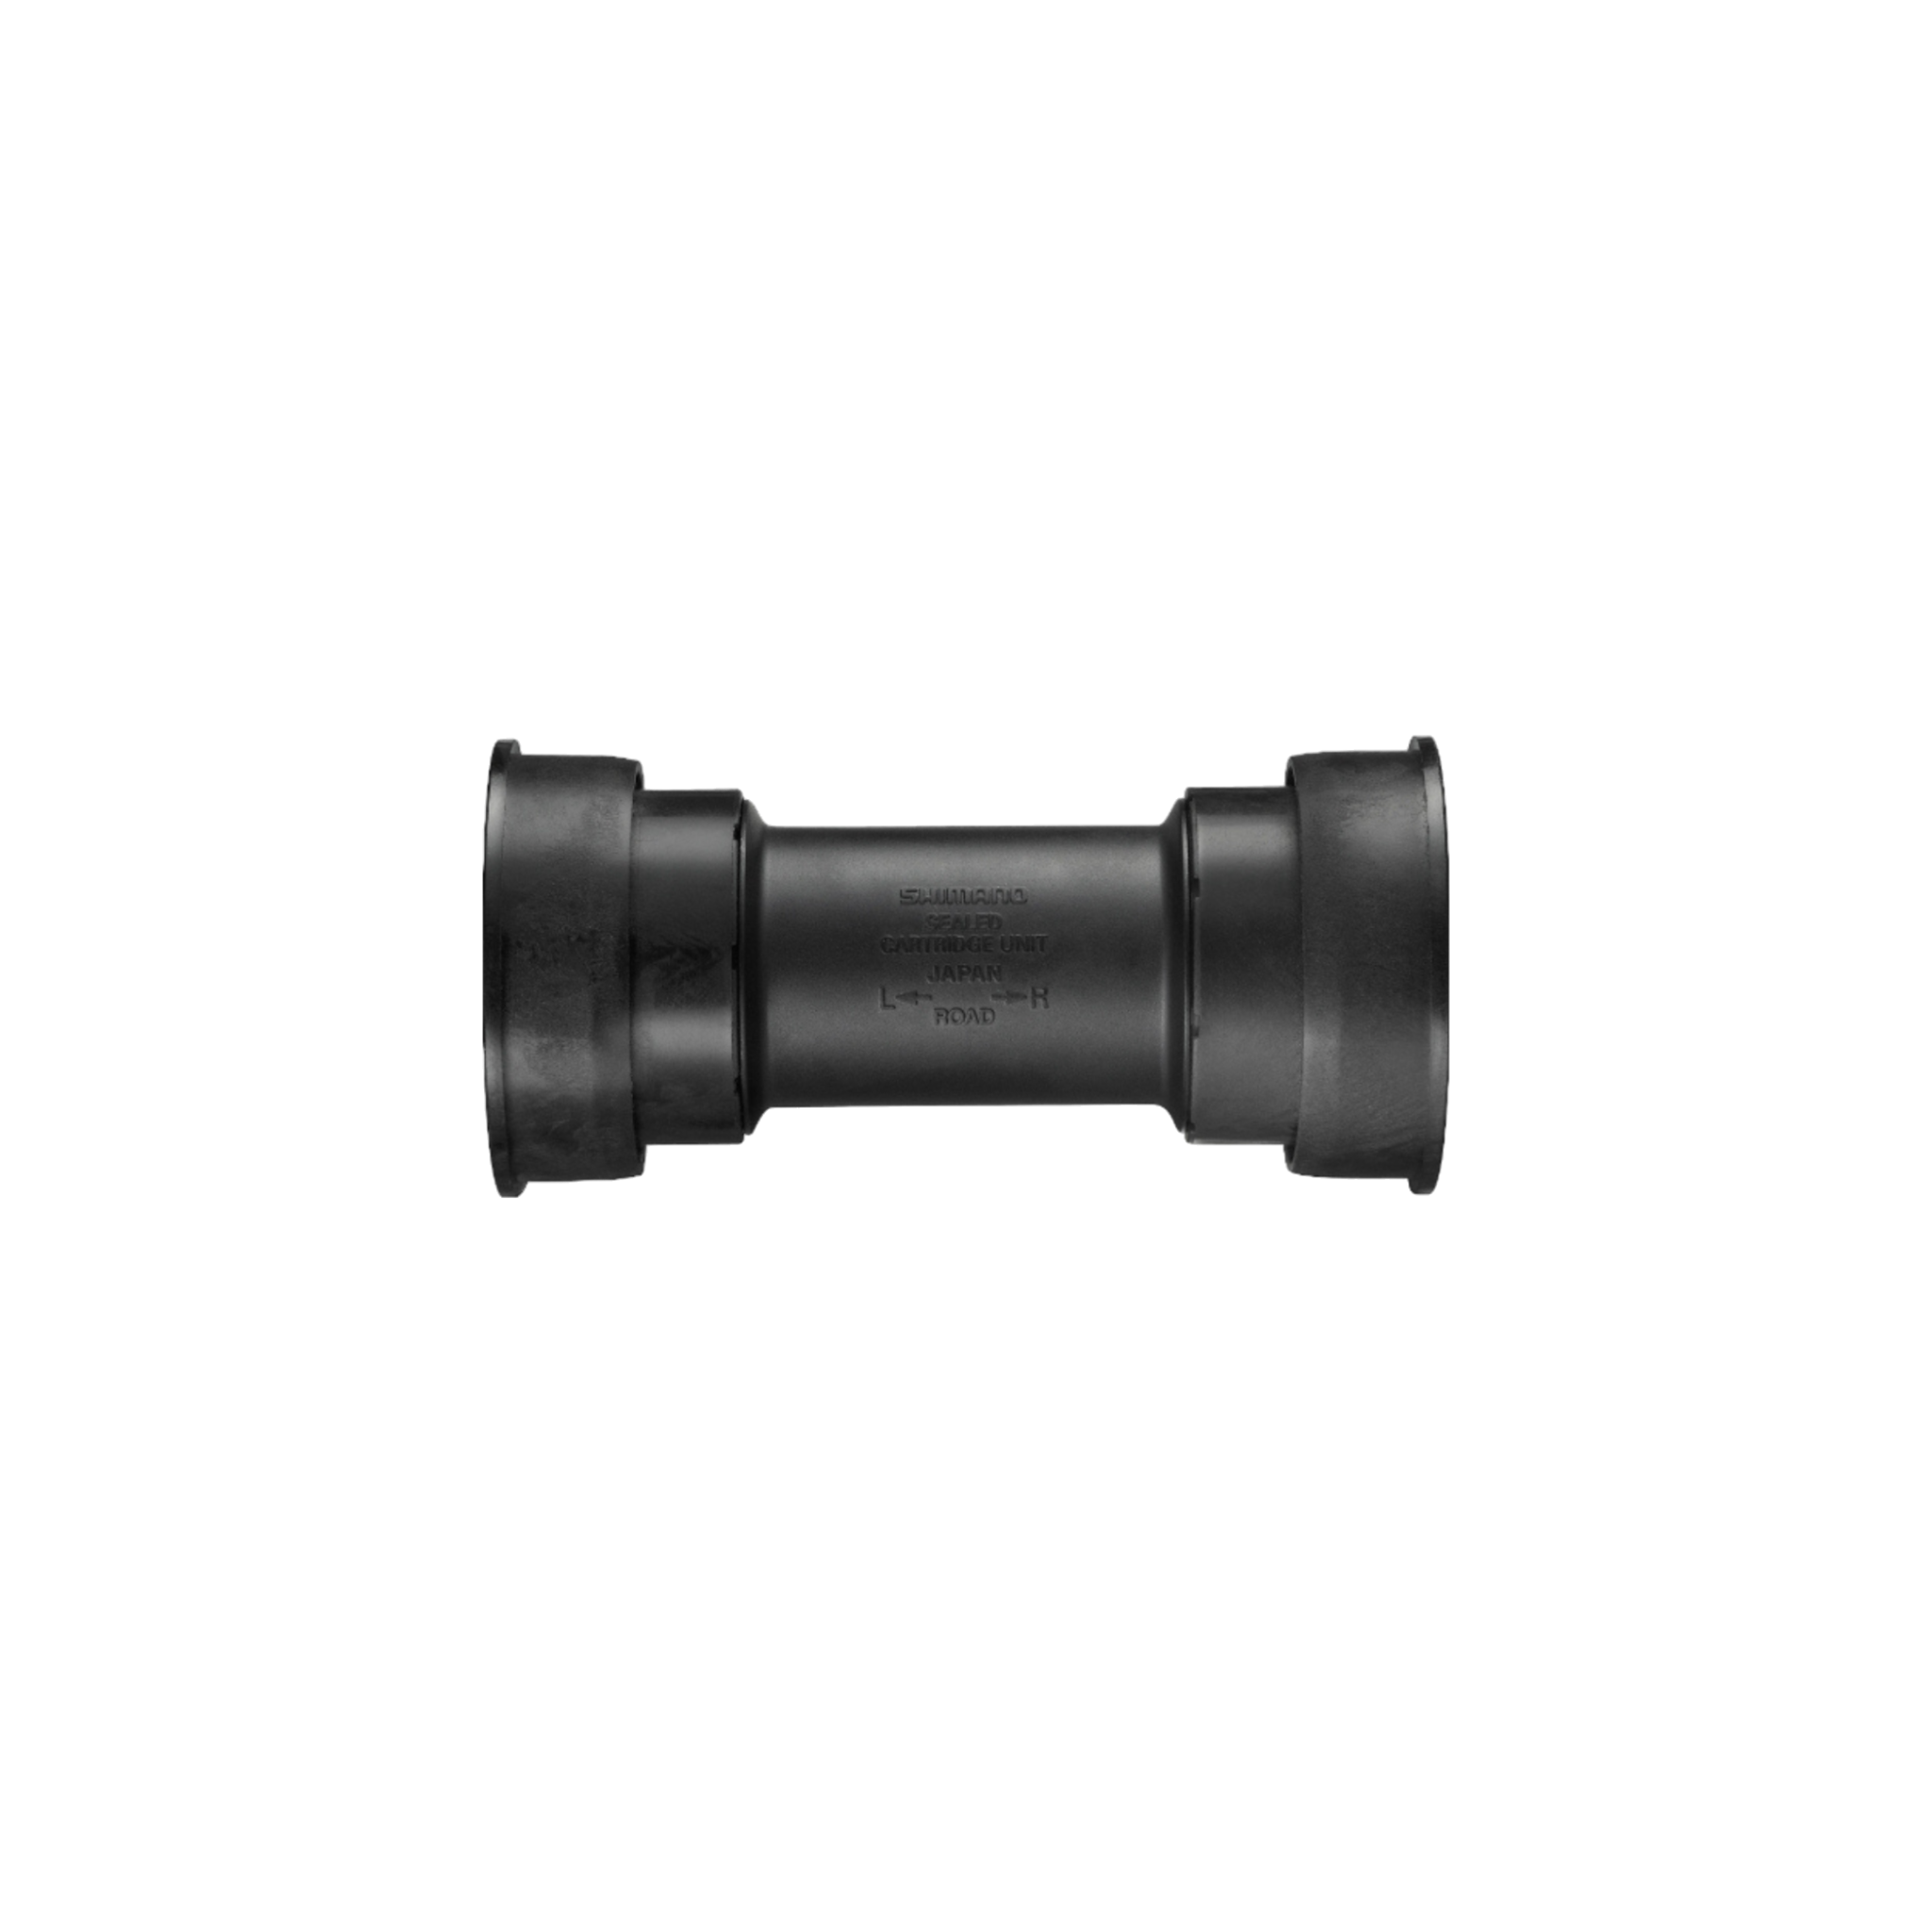 Shimano Dura-Ace Press Fit Bottom Bracket 86.5 mm Shell Width